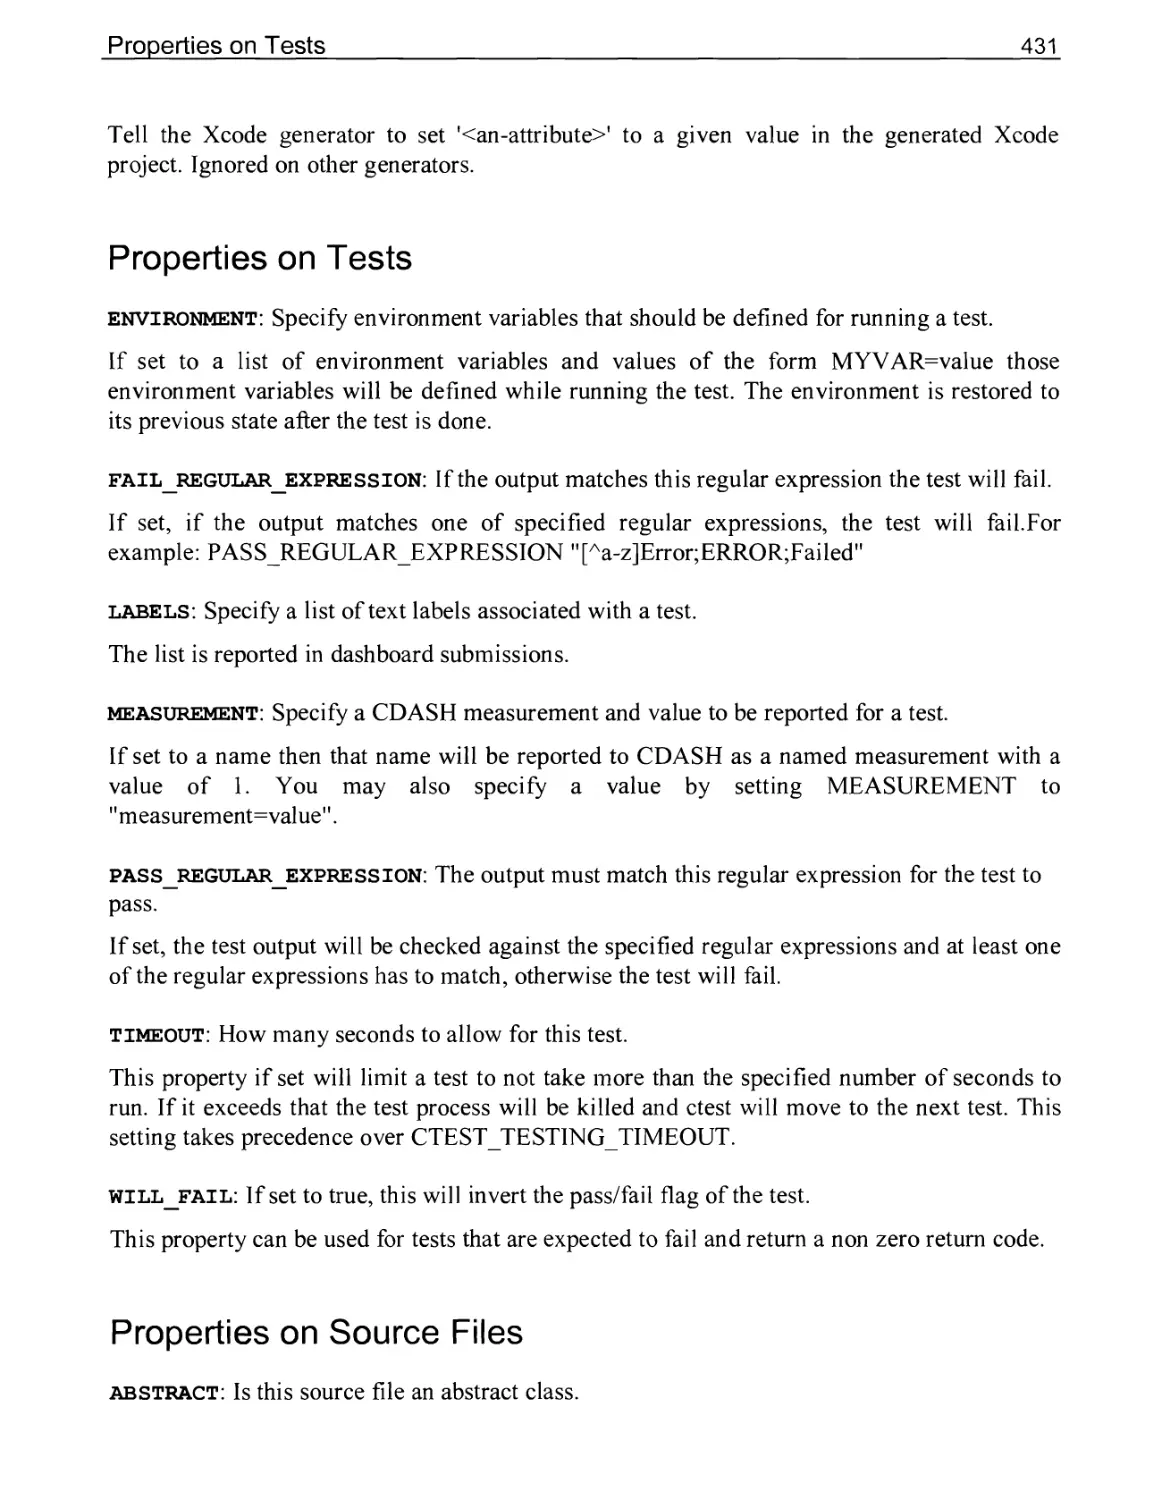 Properties on Tests
Properties on Source Files